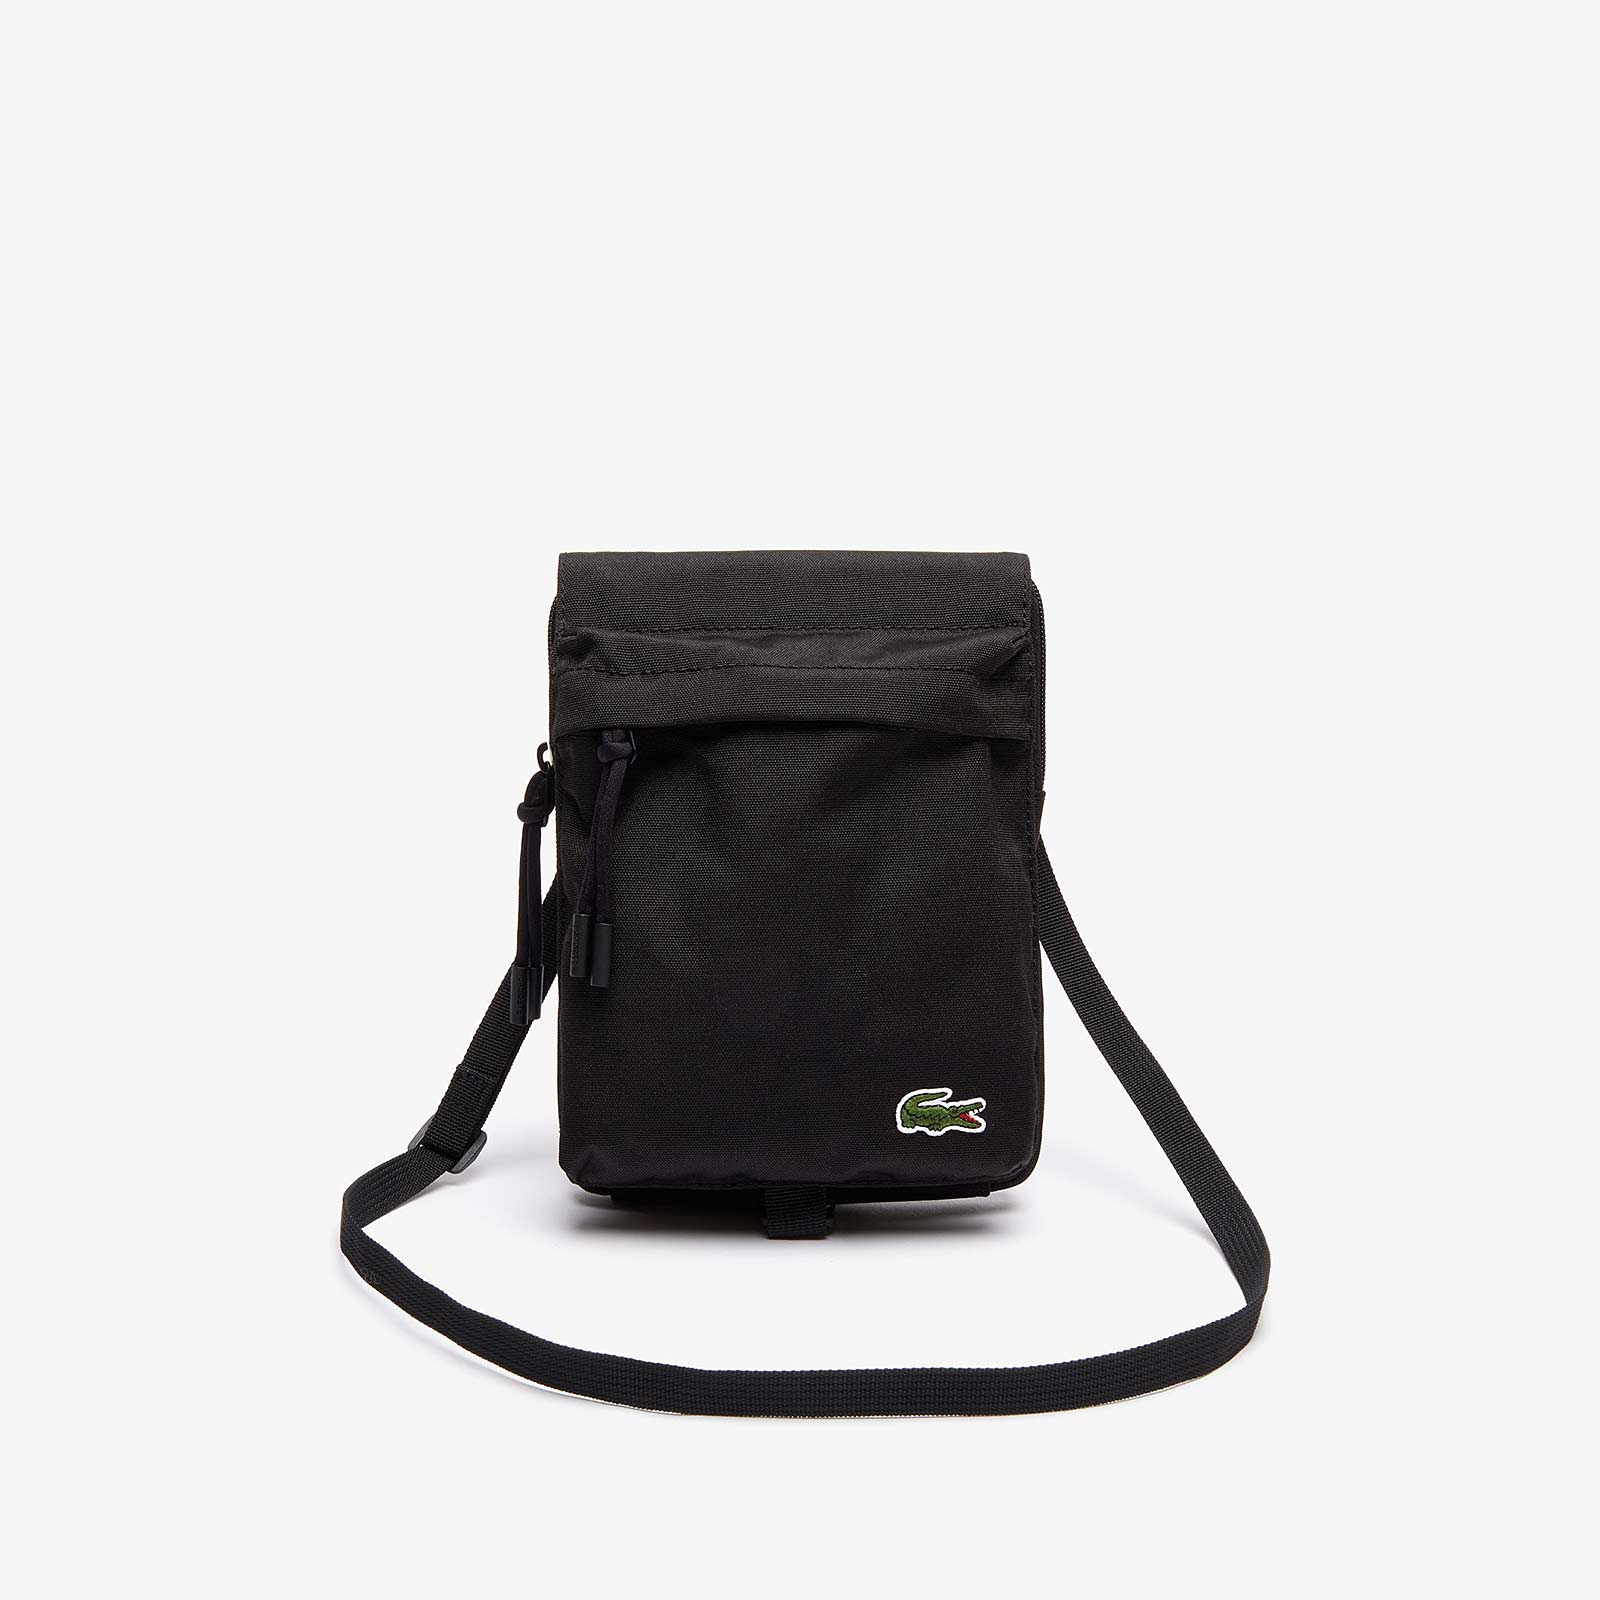 Lacoste Neocroc Adjustable Strap Bag 